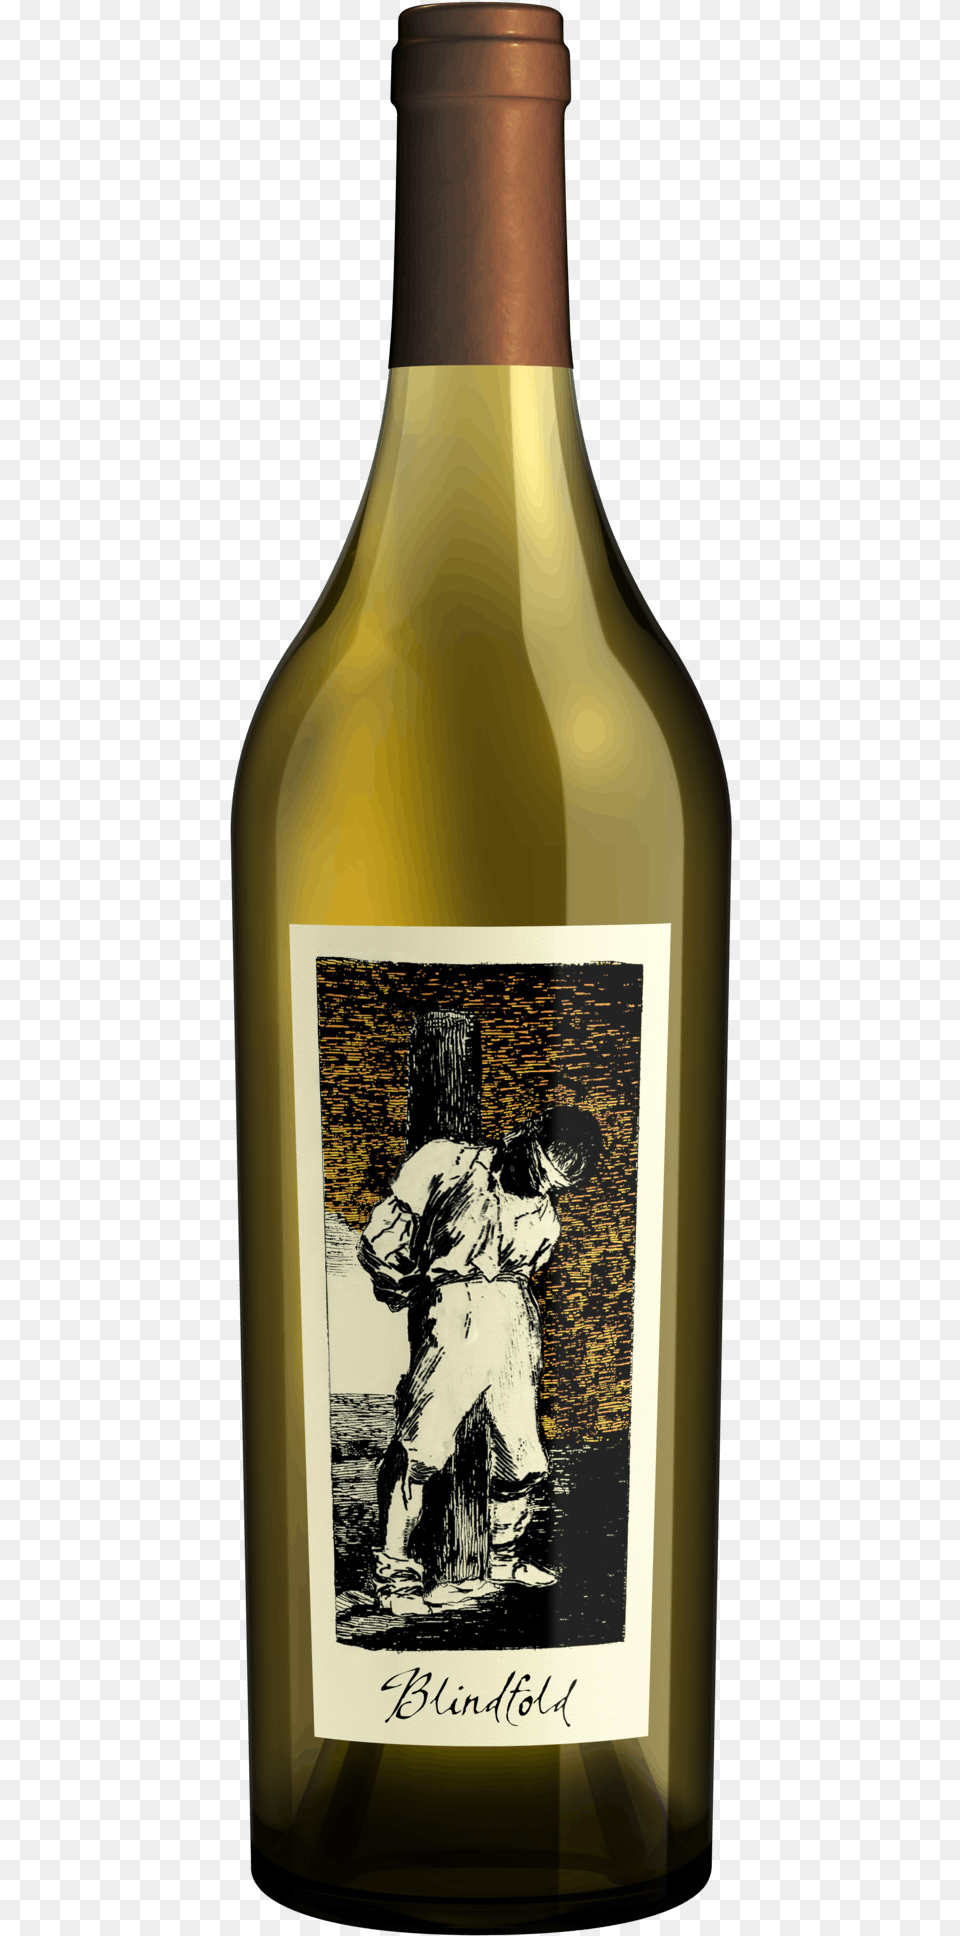 The Prisoner Wine Company Blindfold White Prisoner Blindfold White Blend, Bottle, Adult, Person, Female Free Png Download